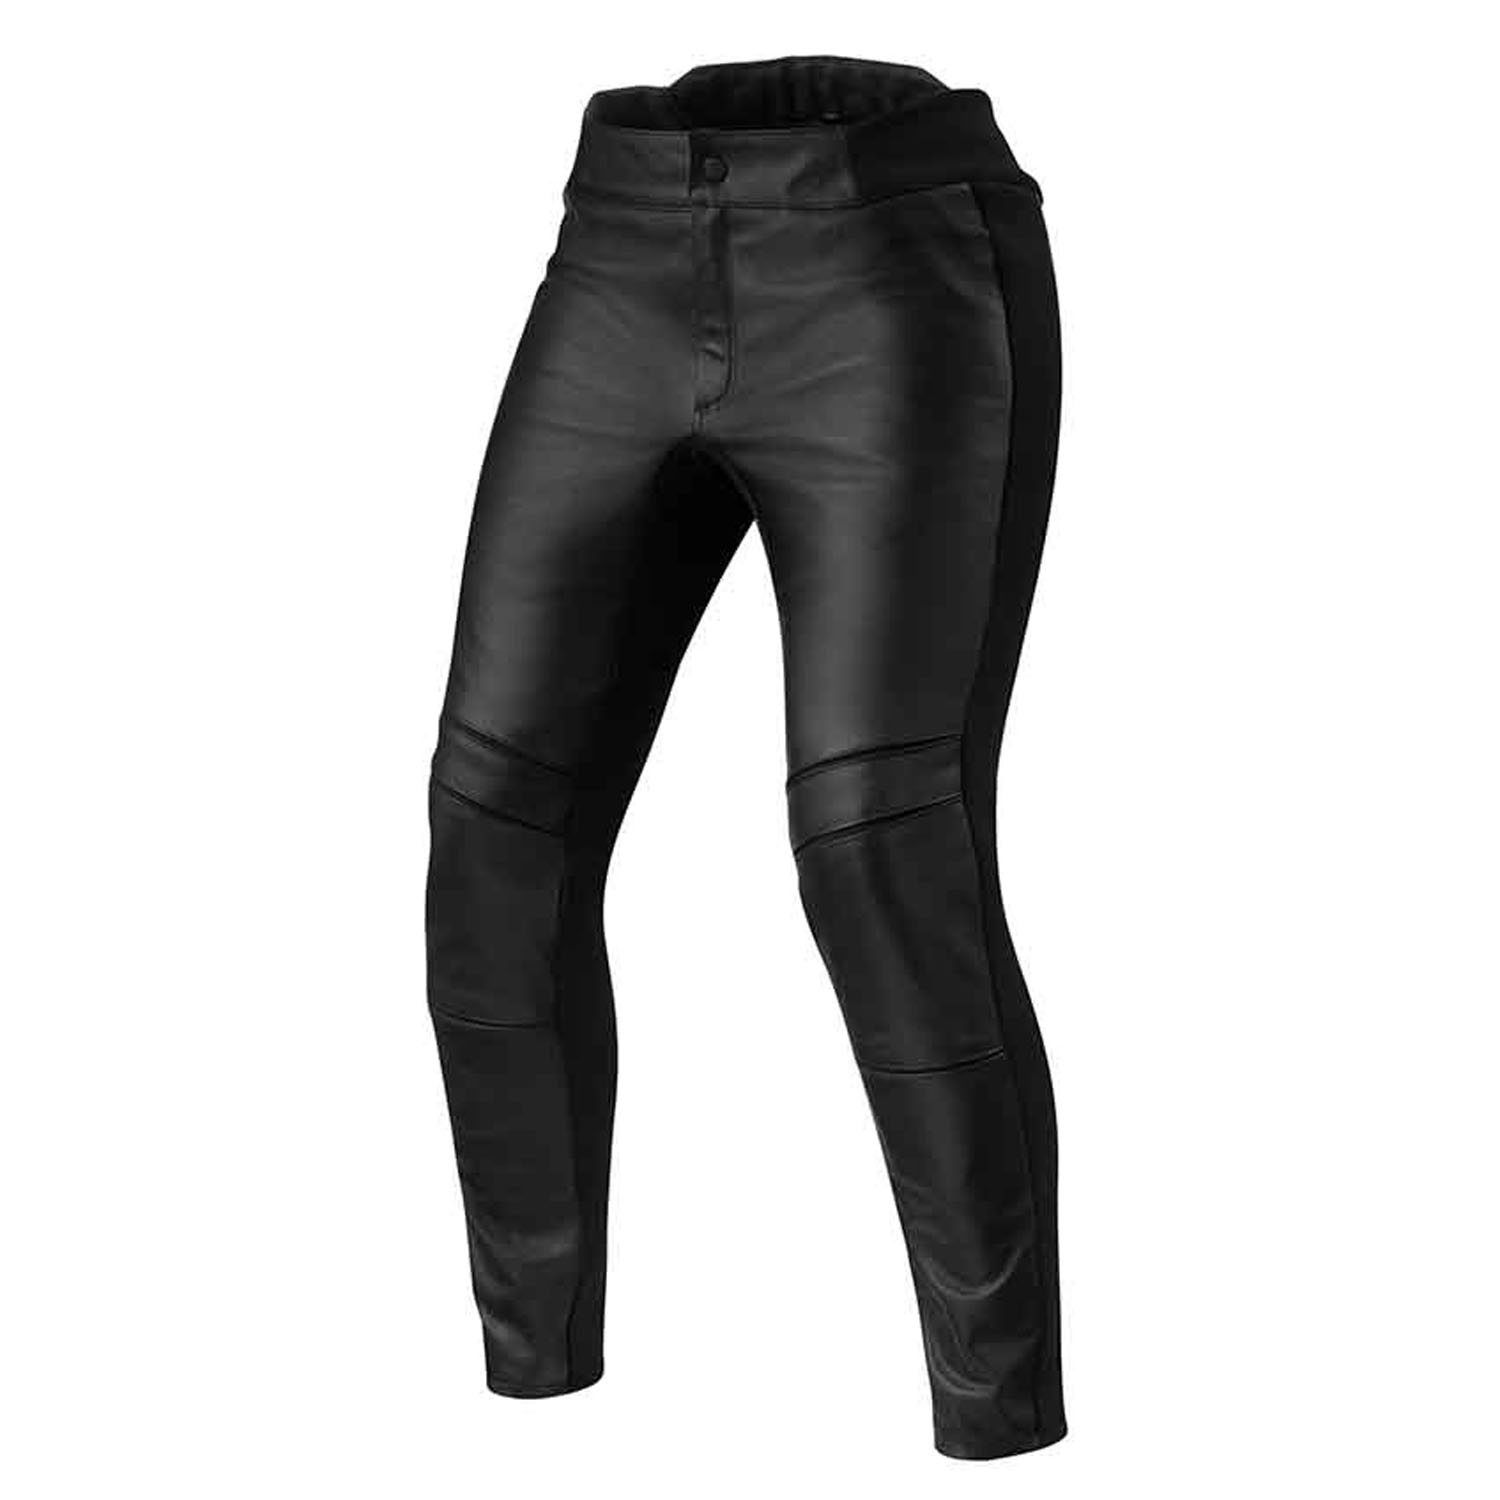 REV'IT! Maci Ladies Black Long Motorcycle Pants Size 38